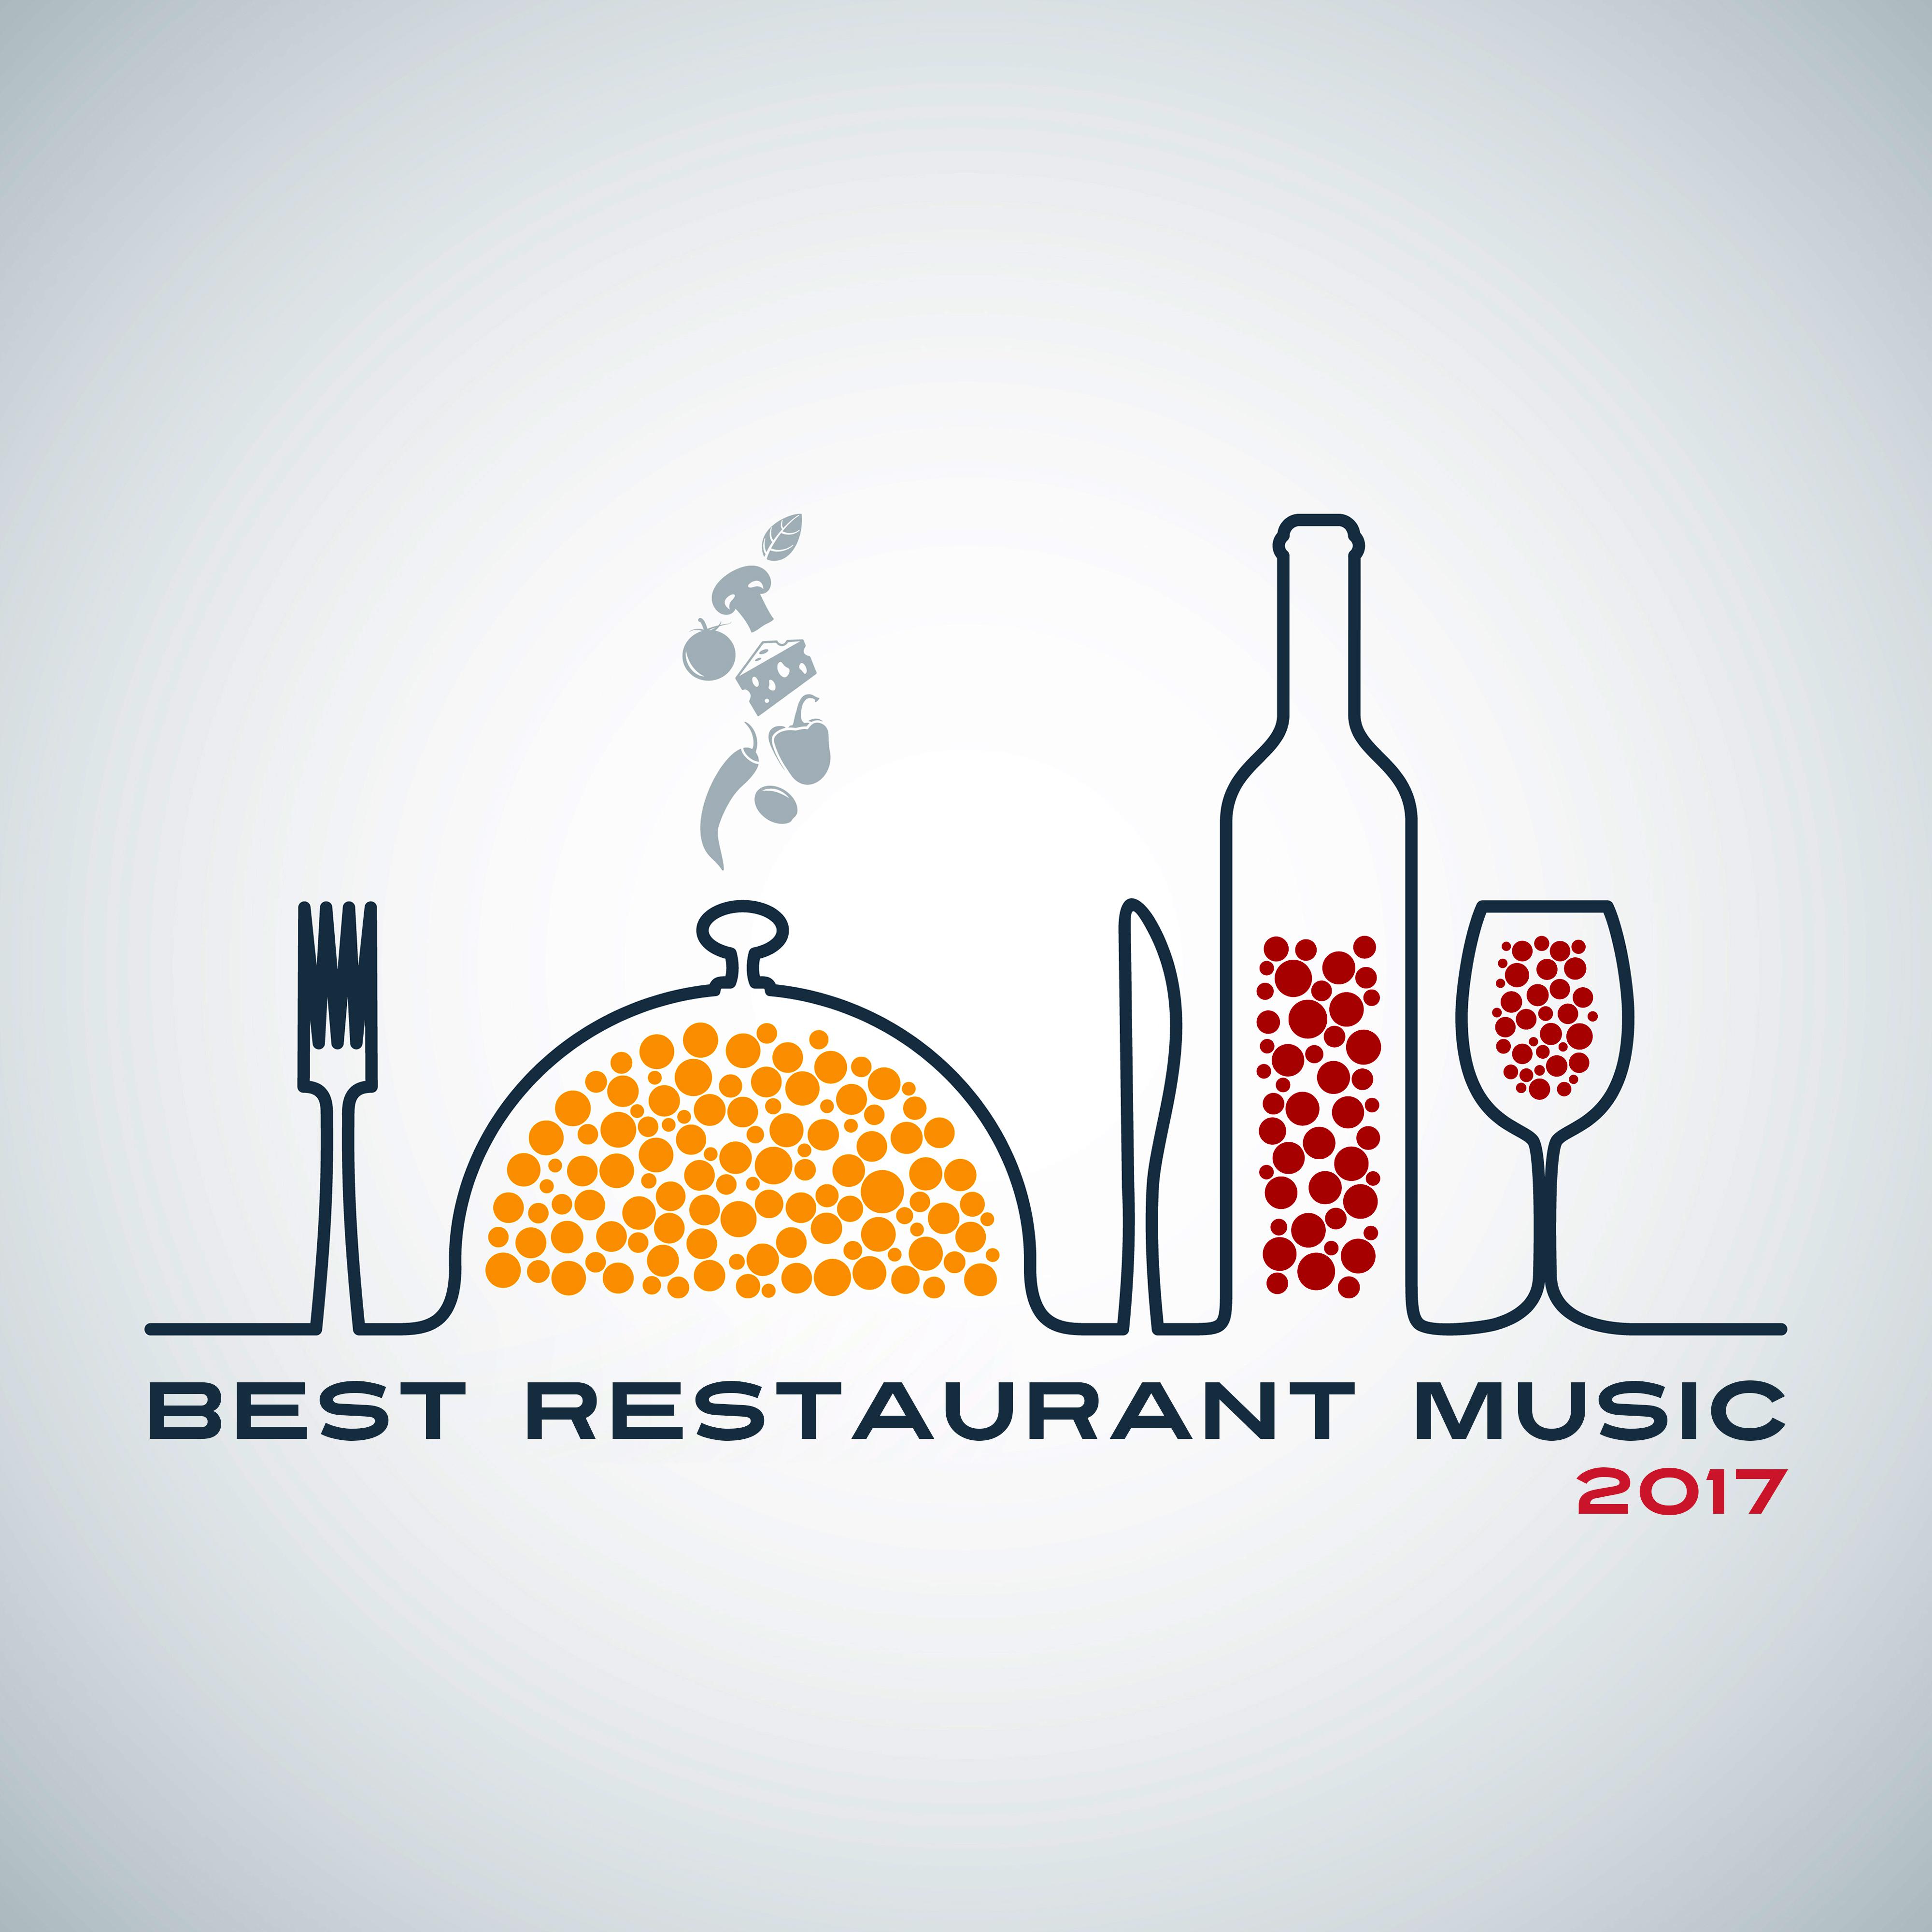 Best Restaurant Music 2017